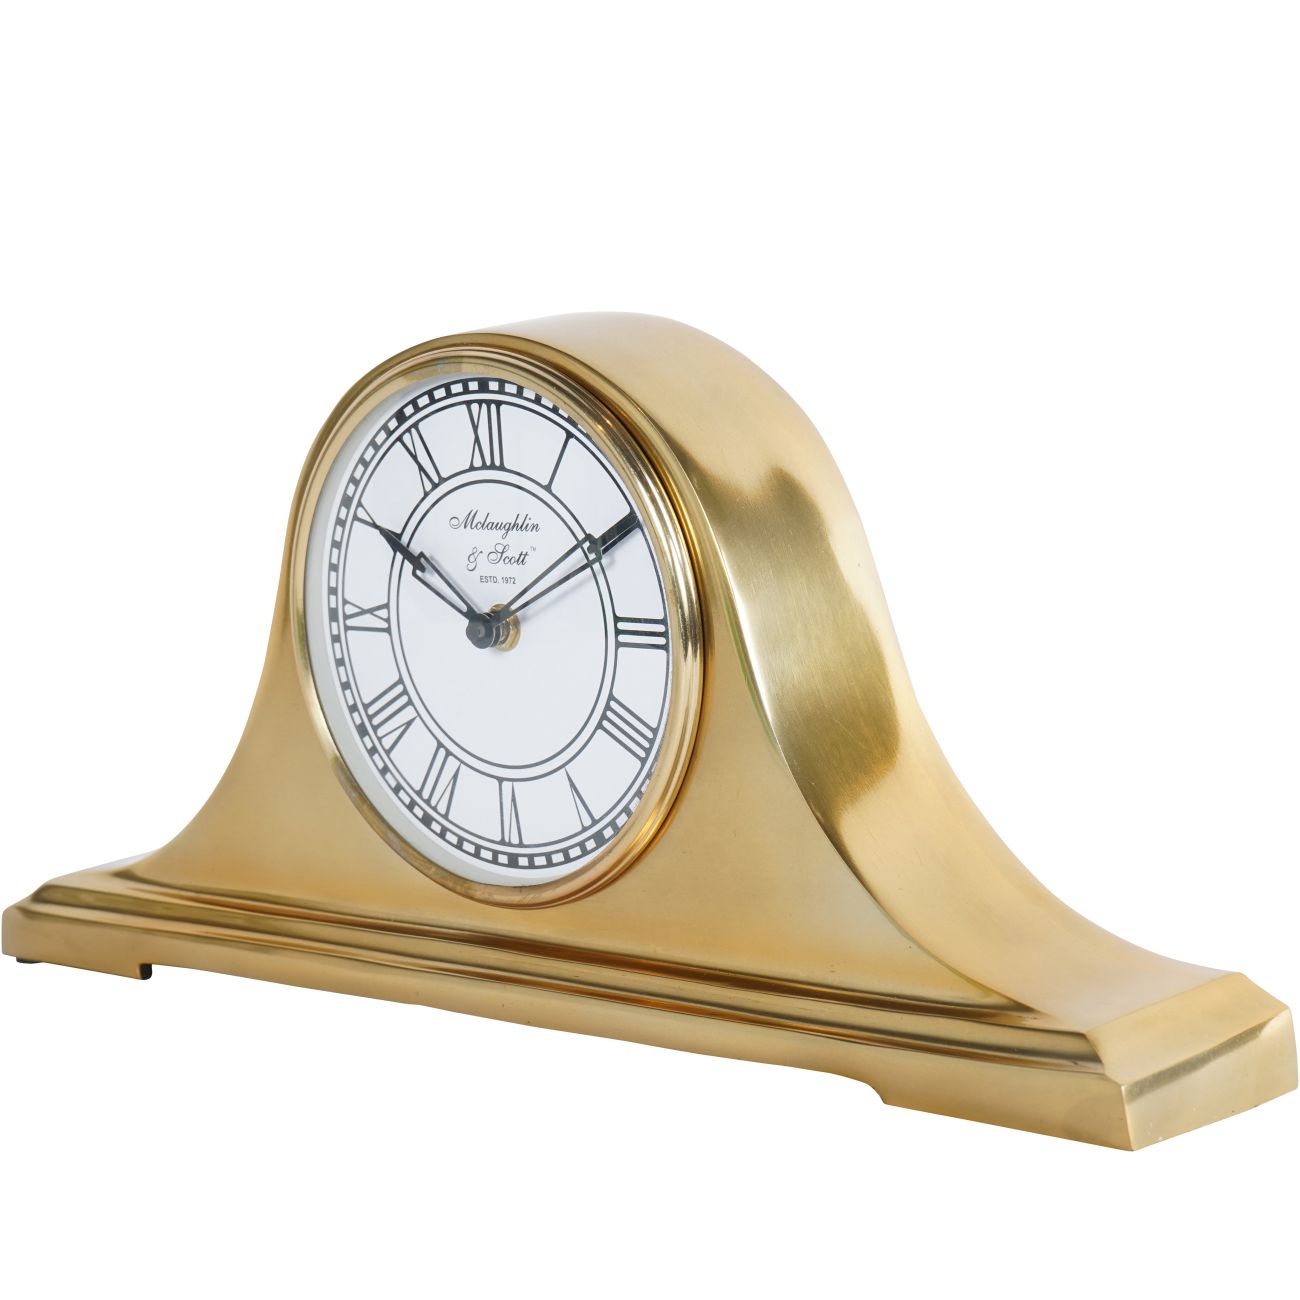 Retro Carriage Mantel Clock in Brass Finish